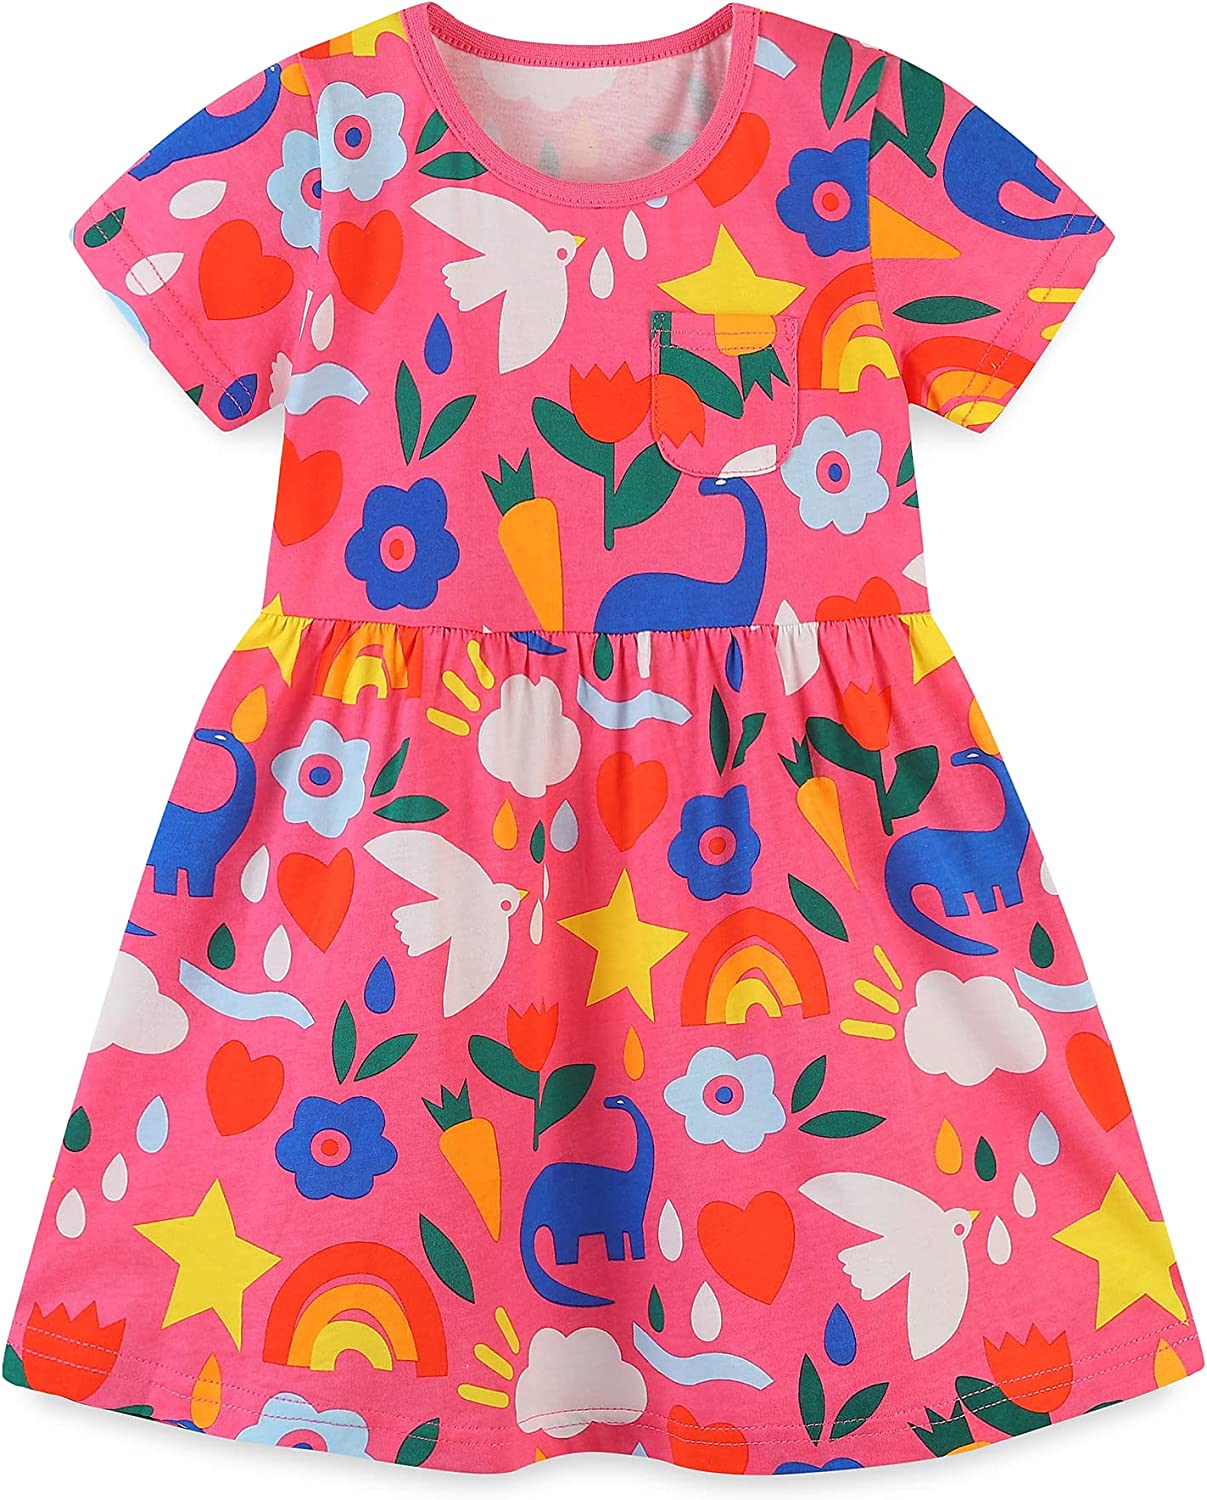 WNQY Toddler Girls Baby Princess Dress Short Sleeve Cartoon Print Dresses 